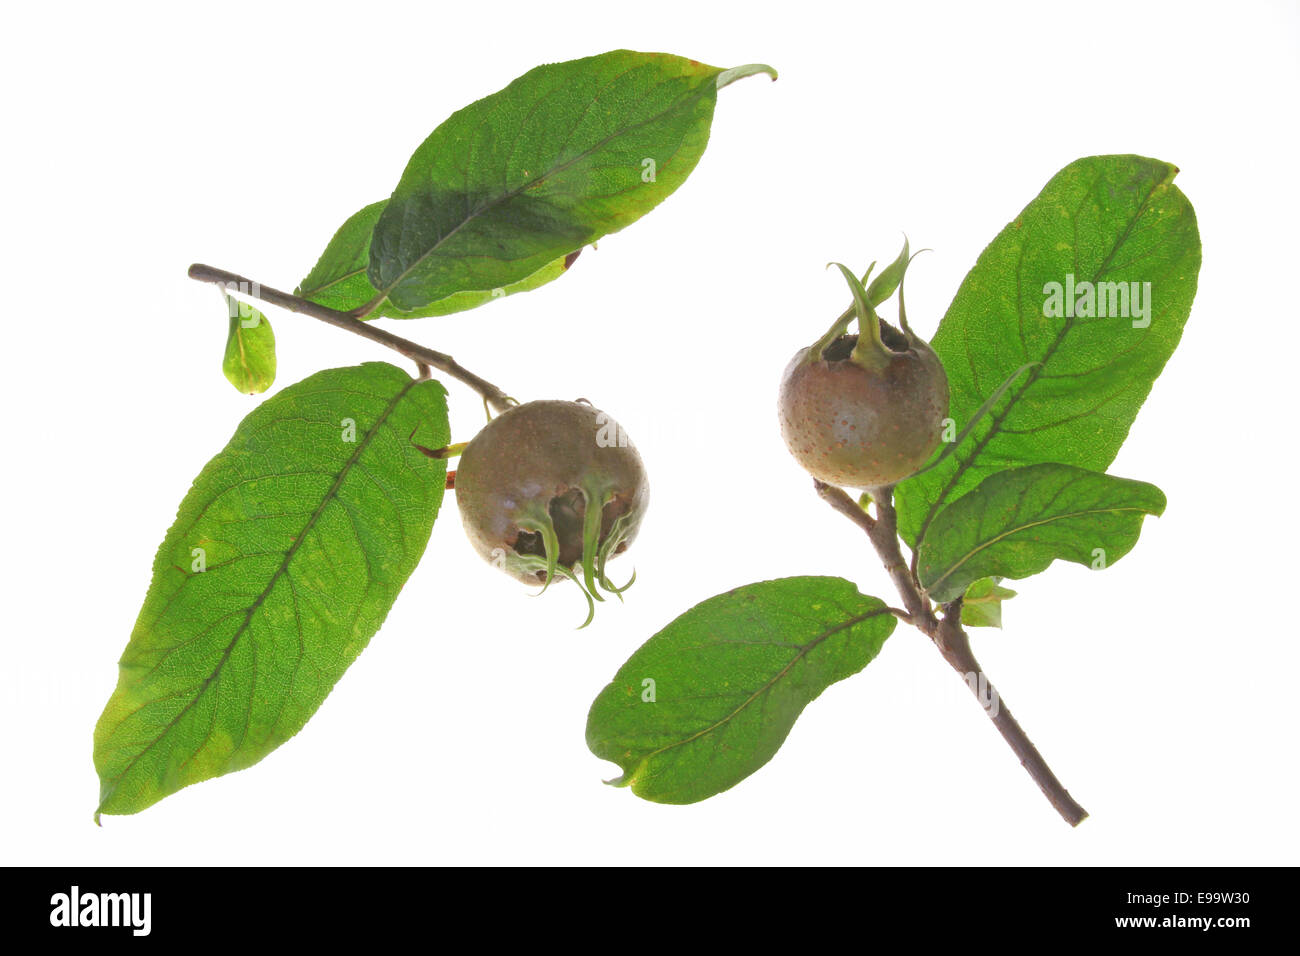 Common medlar (Mespilus germanica) Stock Photo